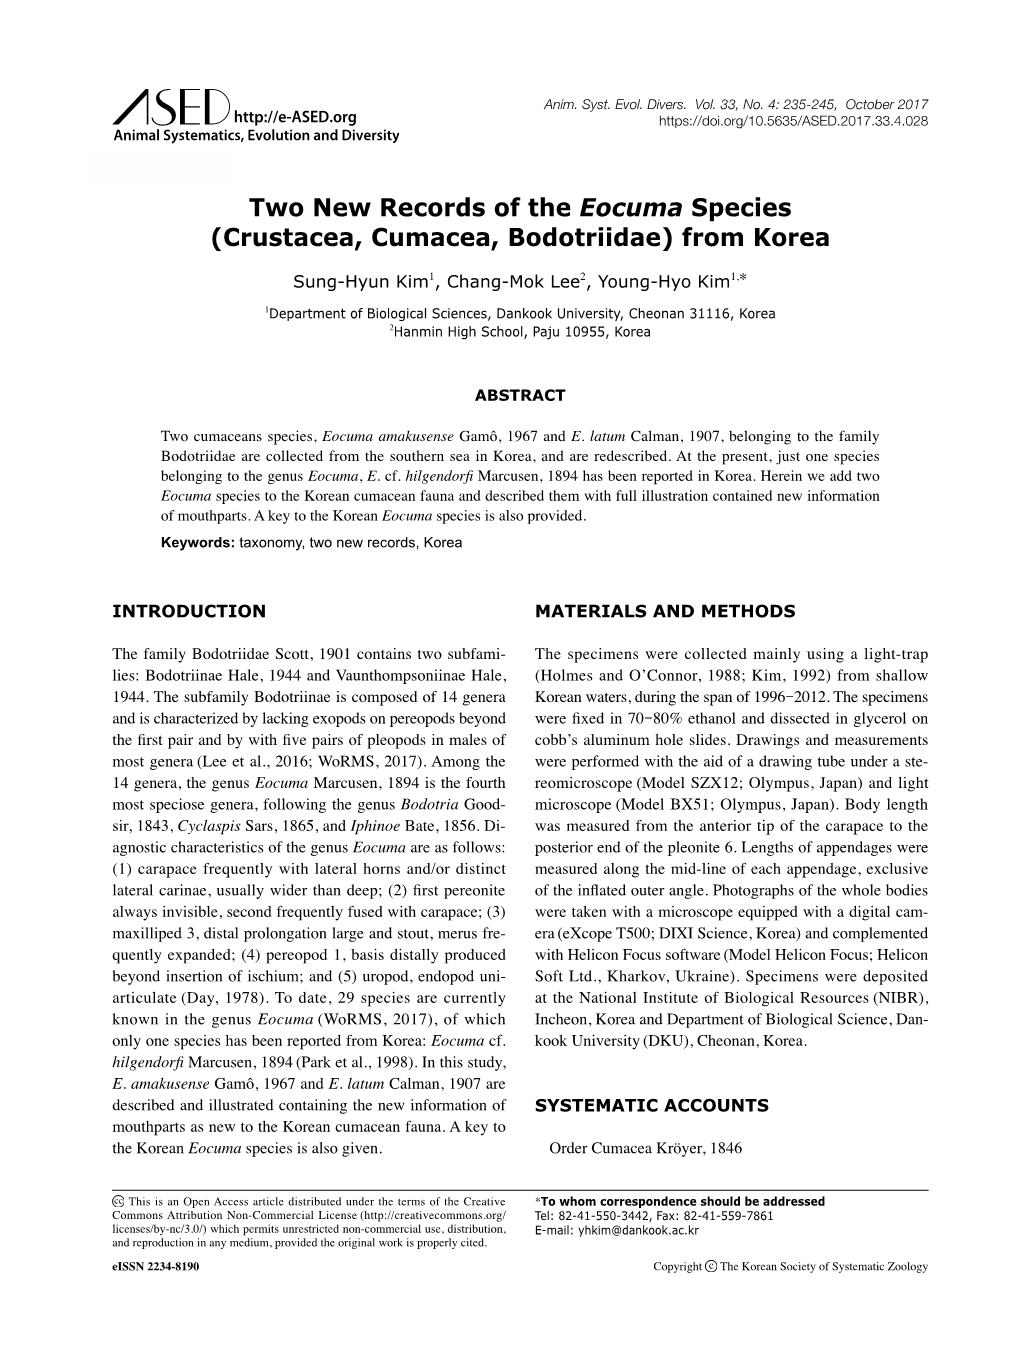 Two New Records of the Eocuma Species (Crustacea, Cumacea, Bodotriidae) from Korea